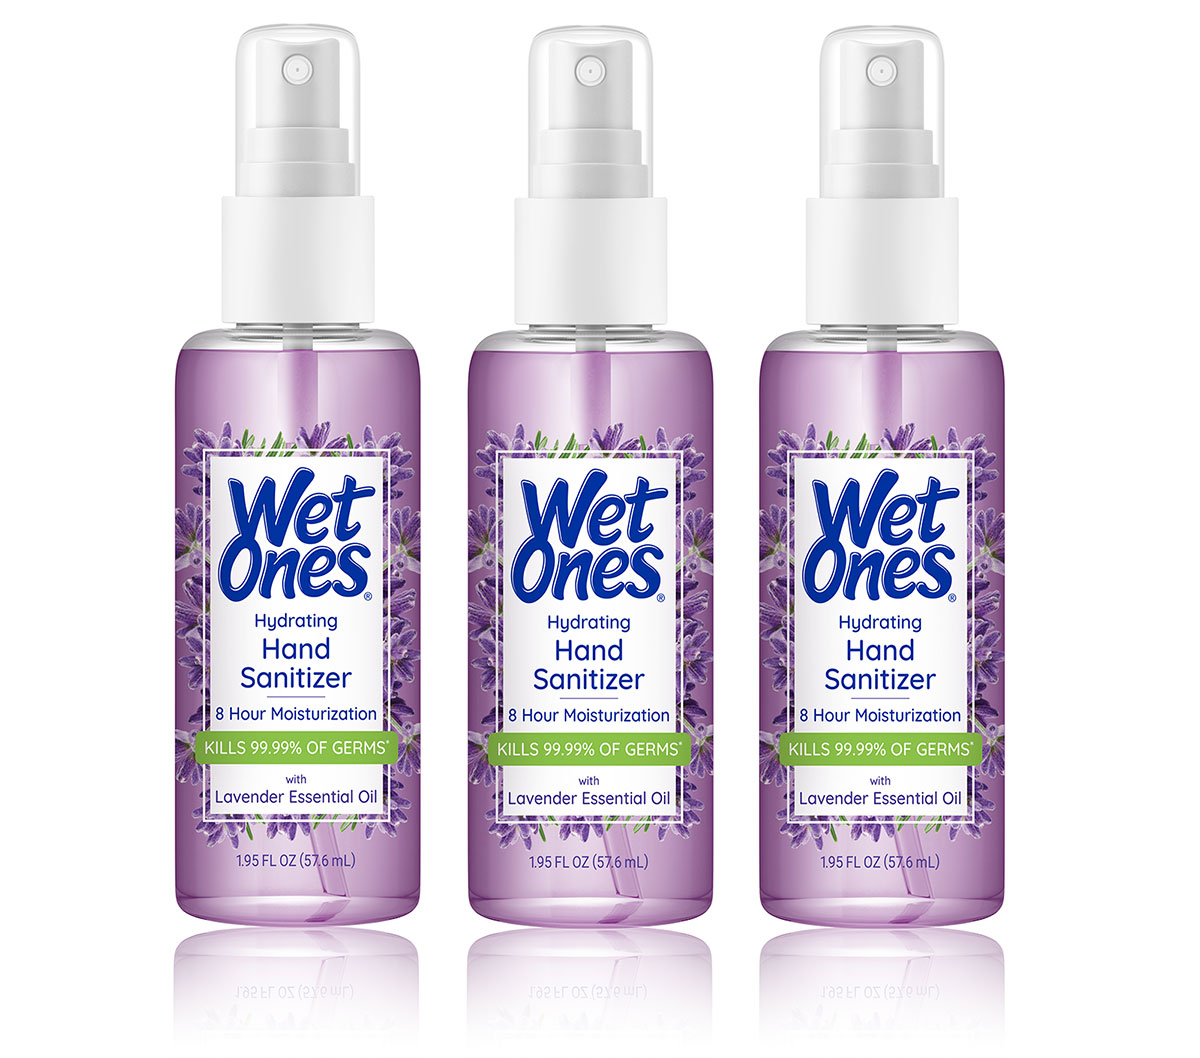 Wet Ones Hand Sanitizer Packaging